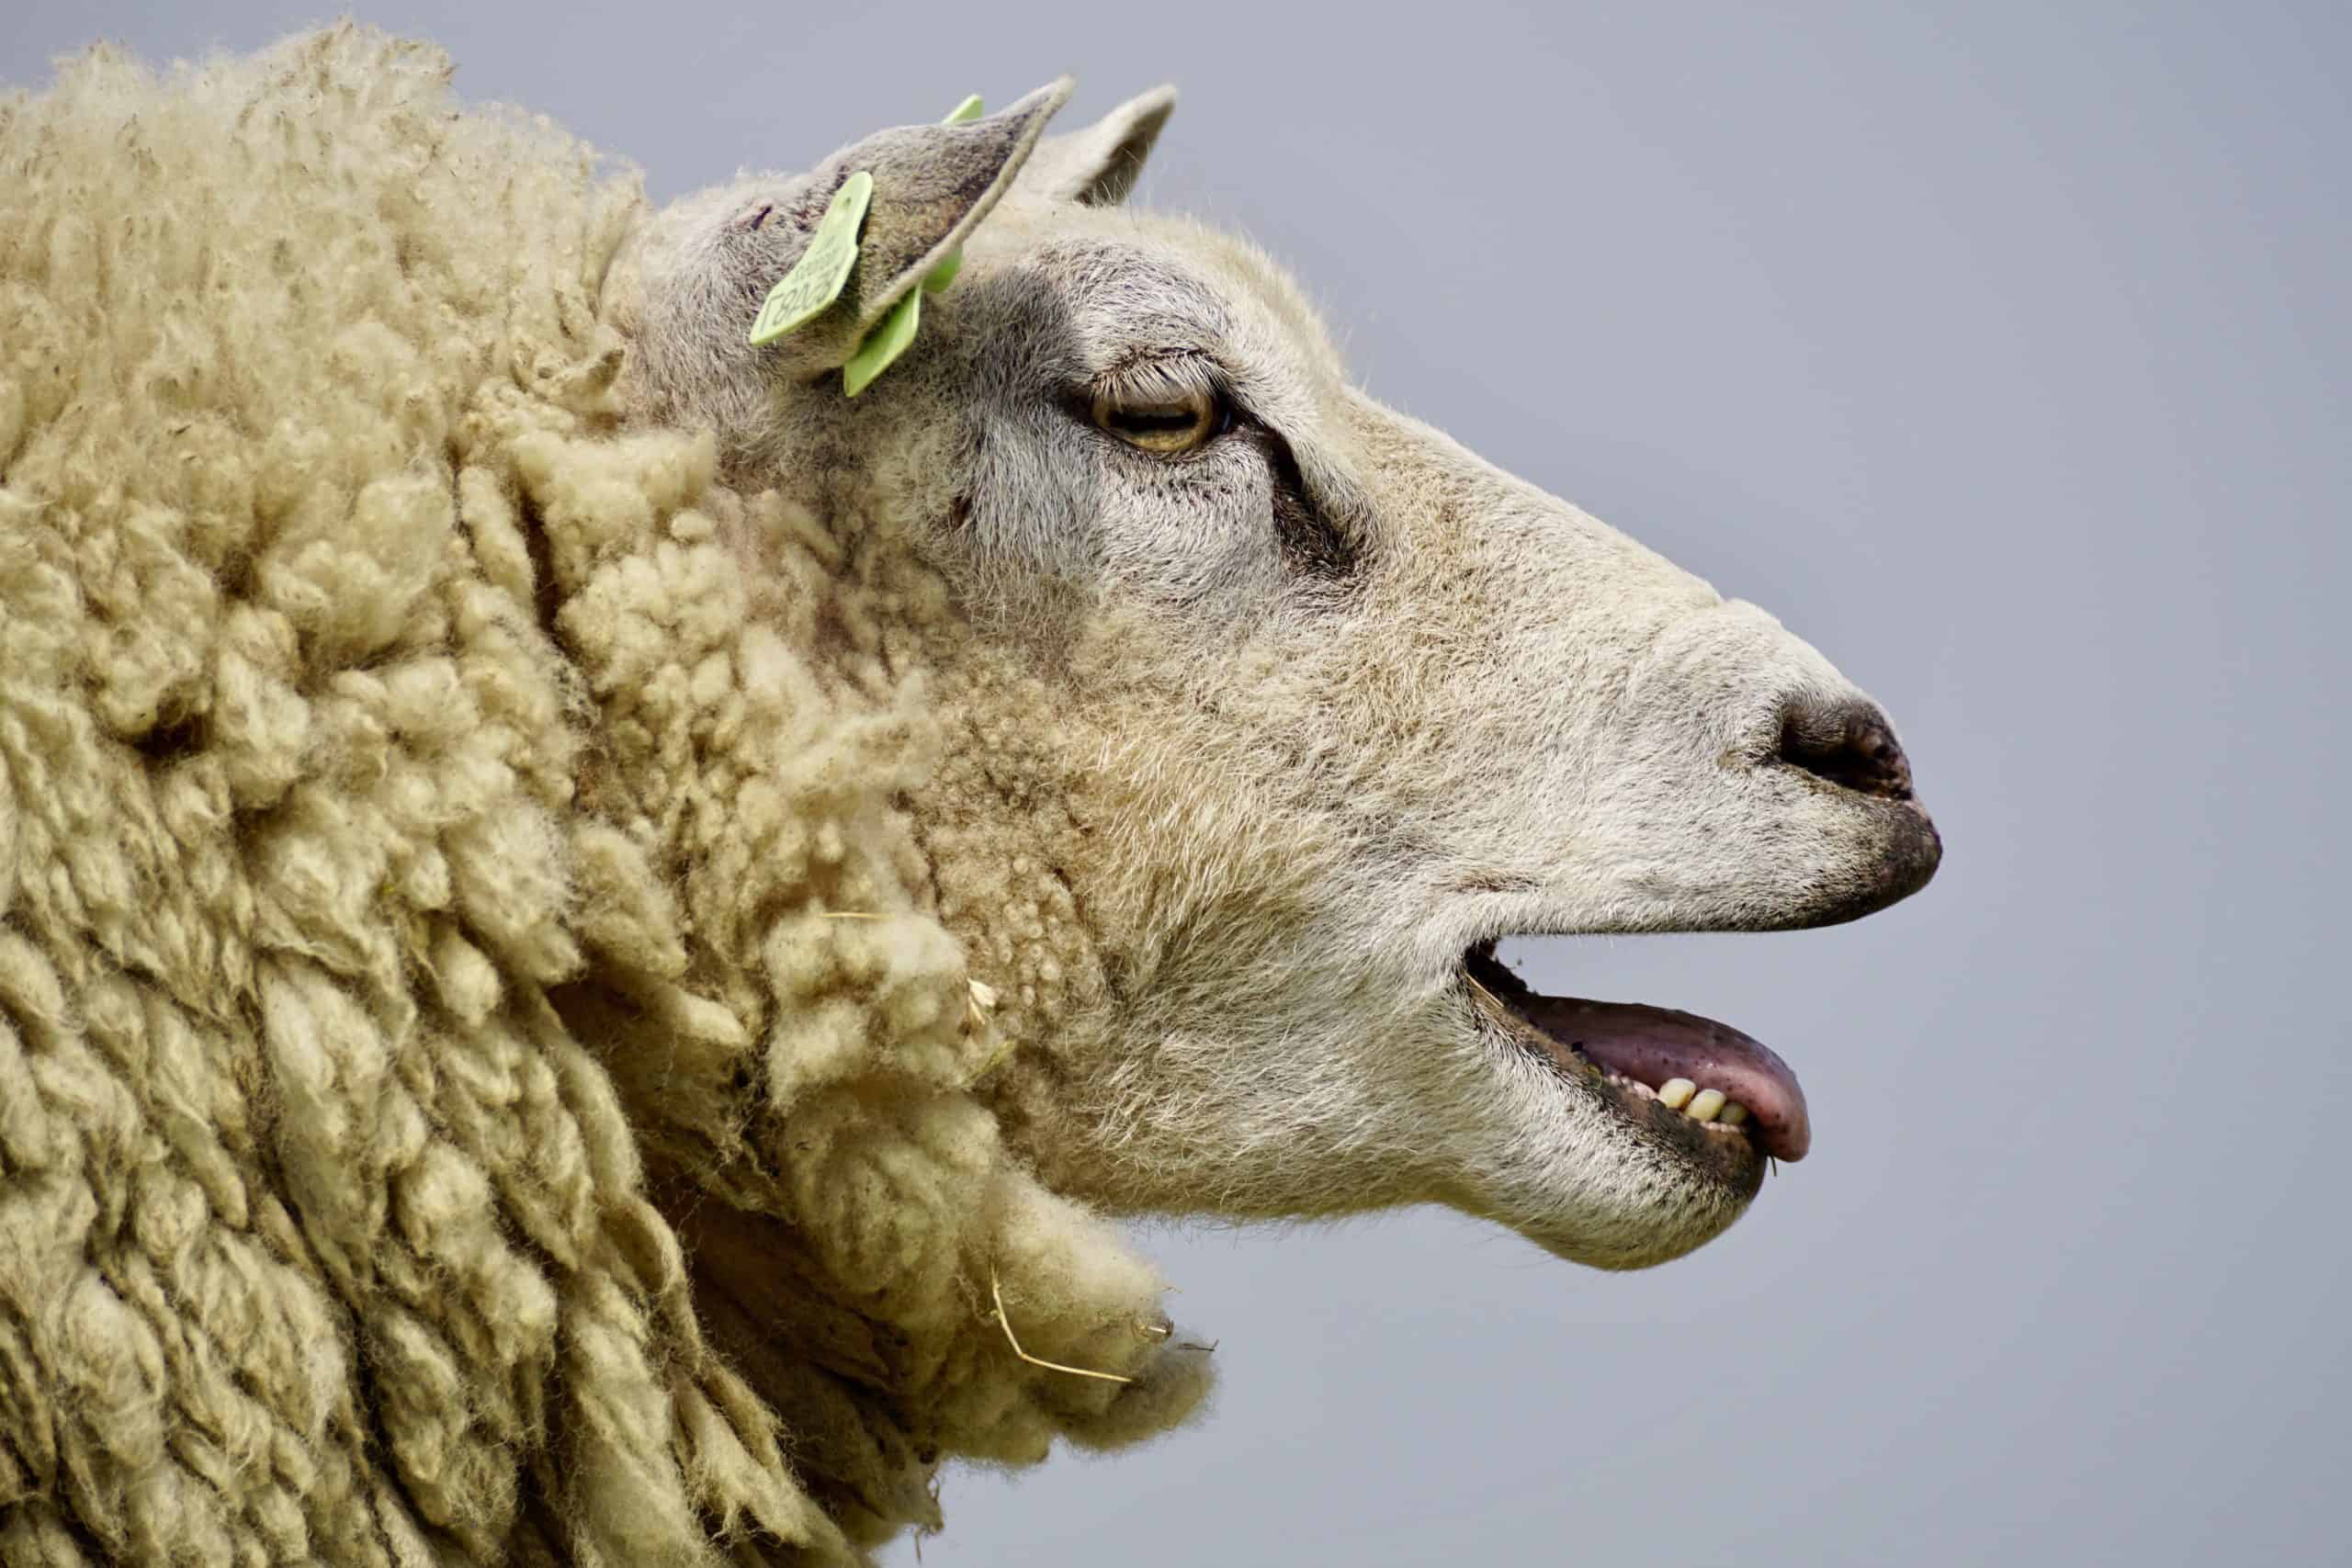 Using Sheep Wool as insulation